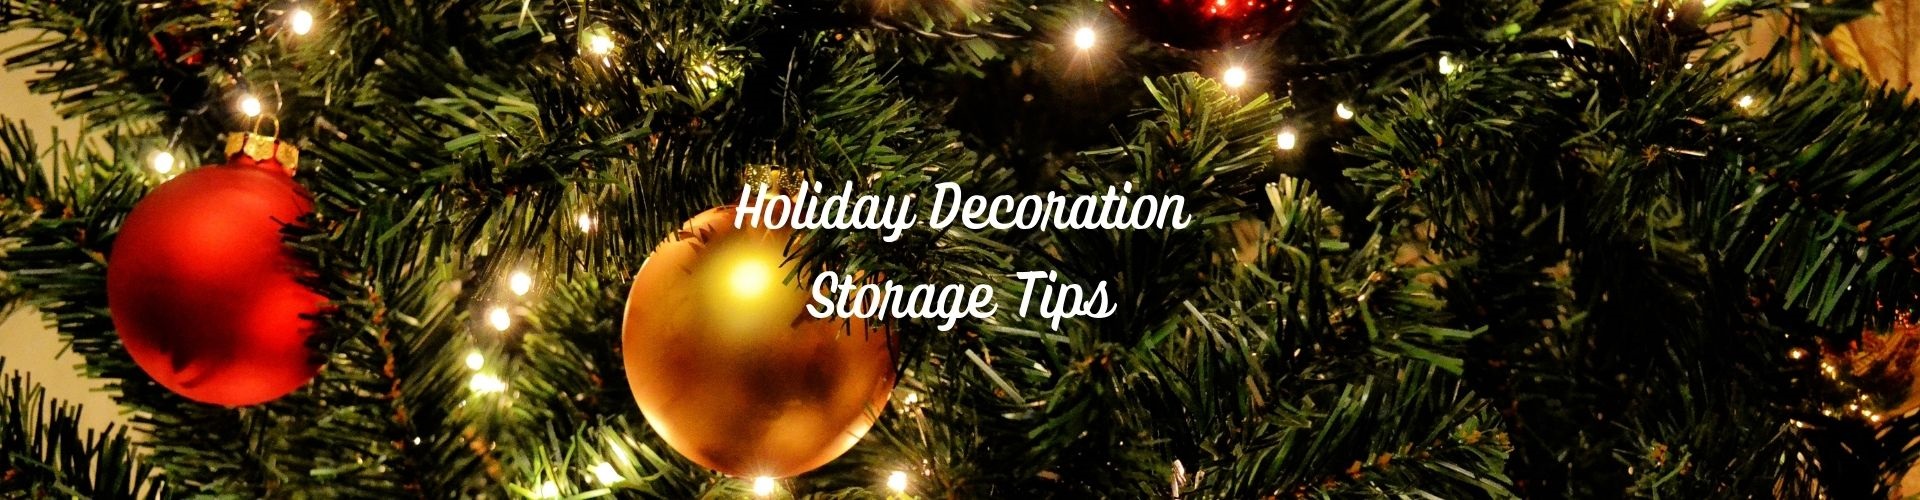 holiday decoration storage tips